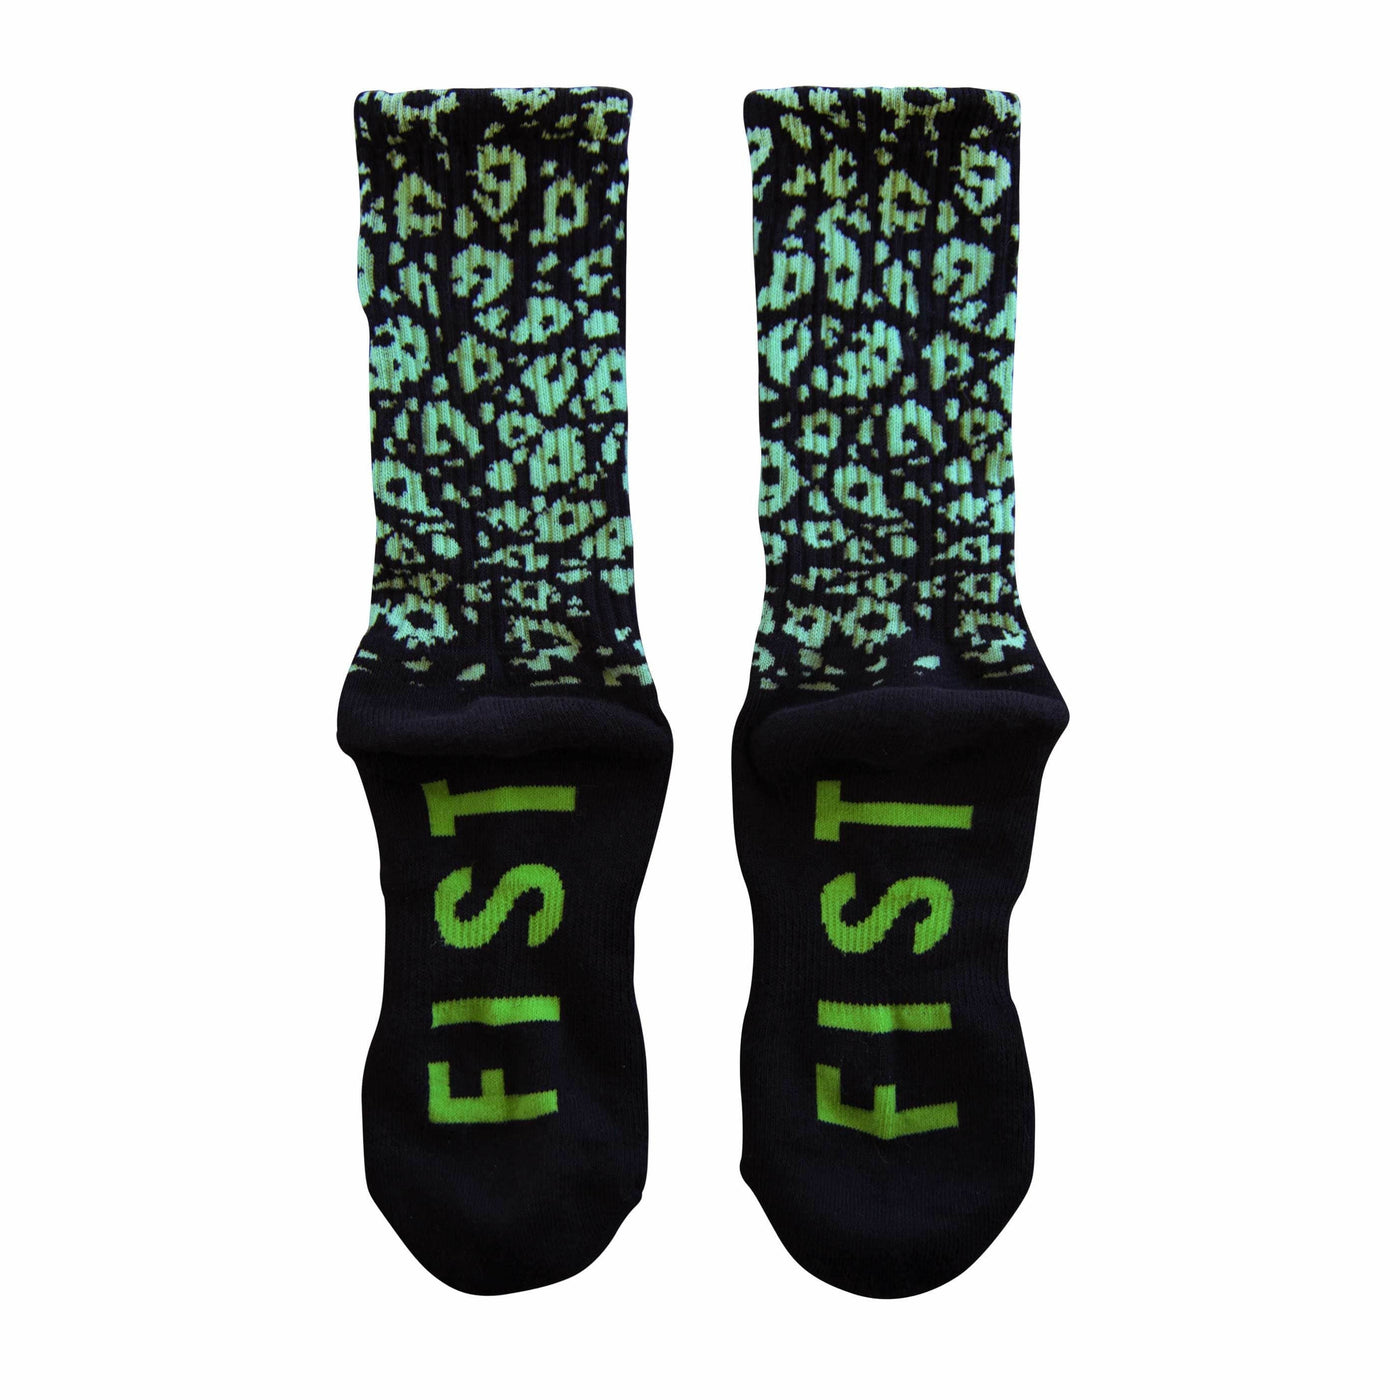 FIST Crew Socks - Croc 8Lines Shop - Fast Shipping